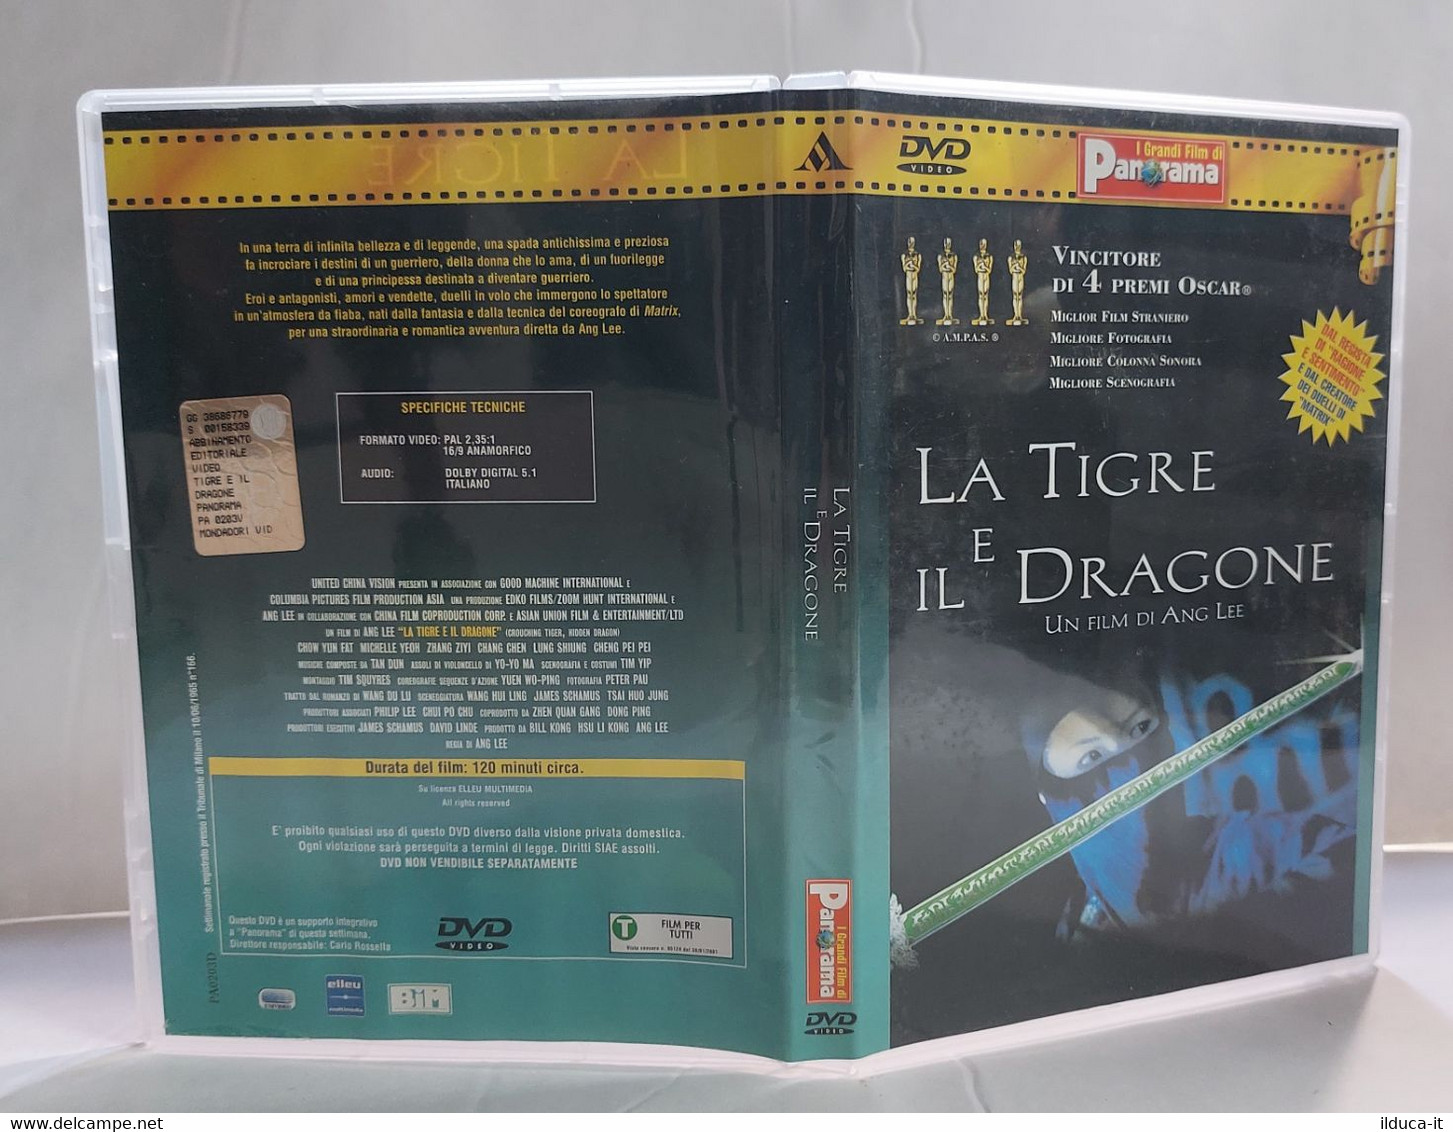 I107072 DVD - LA TIGRE E IL DRAGONE (2001) - Ang Lee / Chow Yun-Fat - Action & Abenteuer